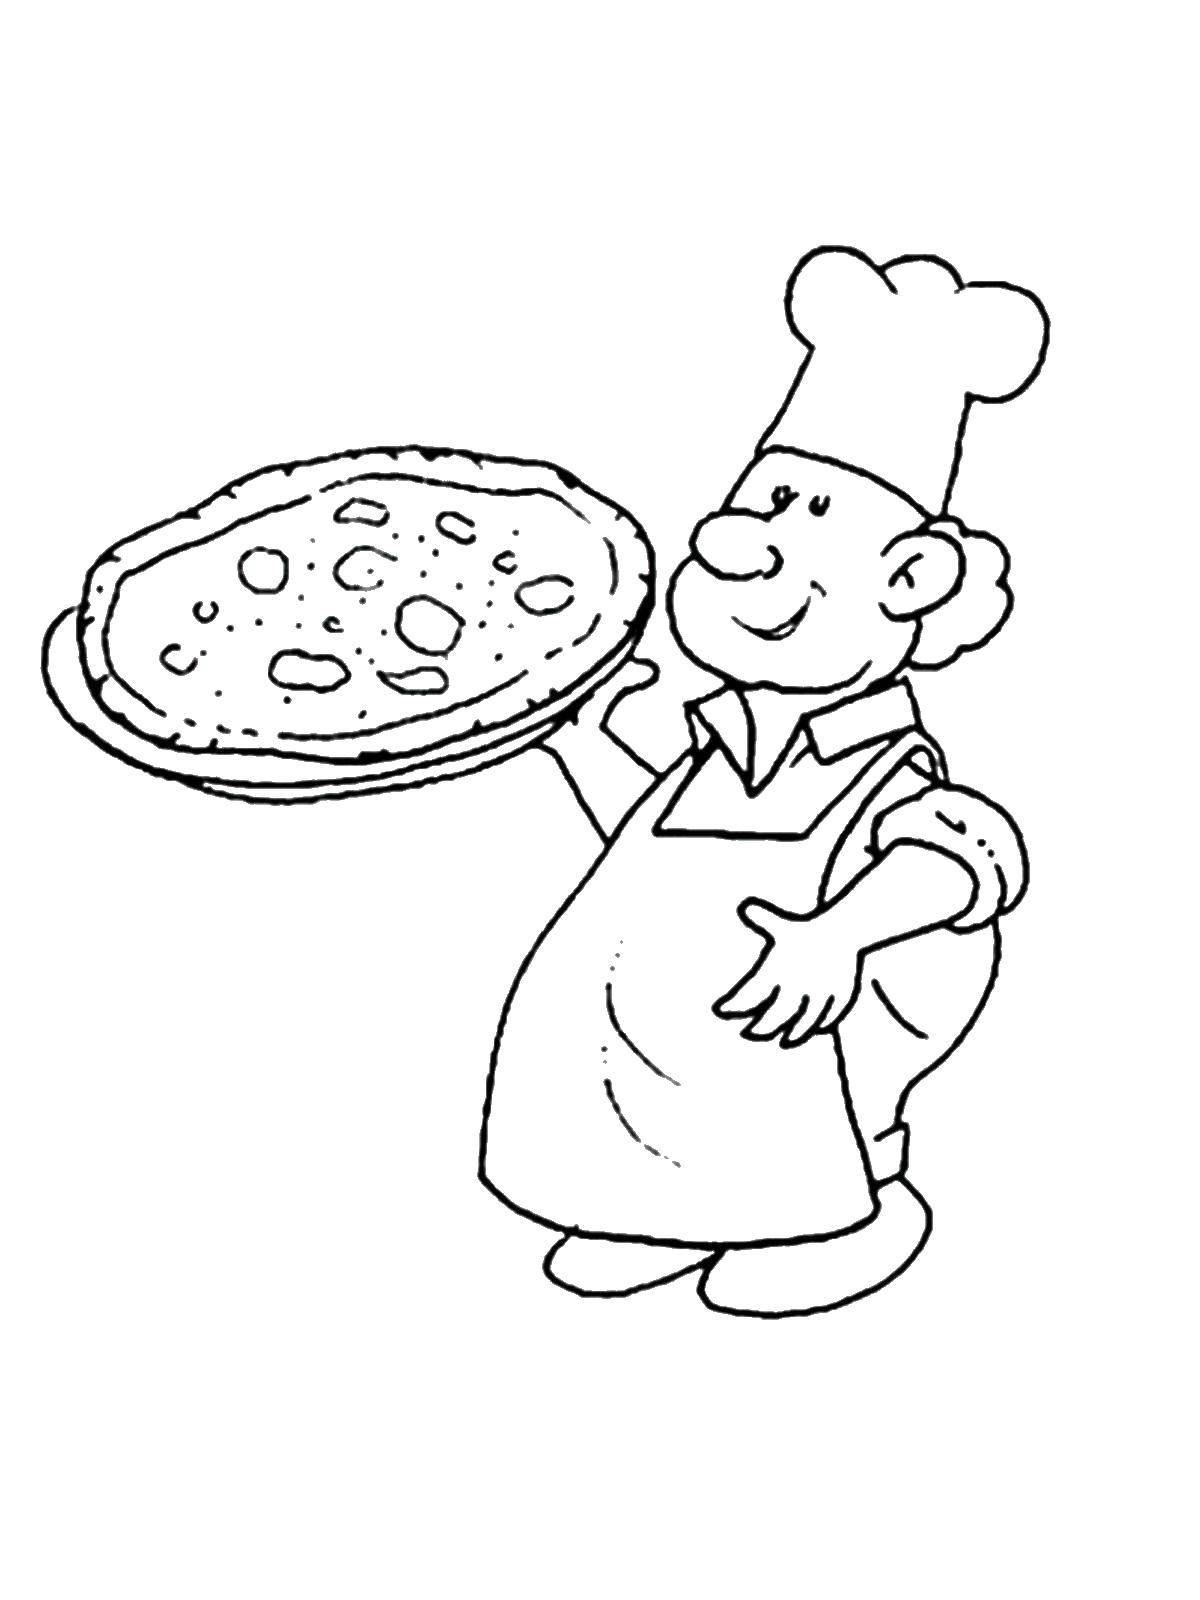 Название: Раскраска Повар приготовил пиццу. Категория: профессии. Теги: профессии, повар, пицца.